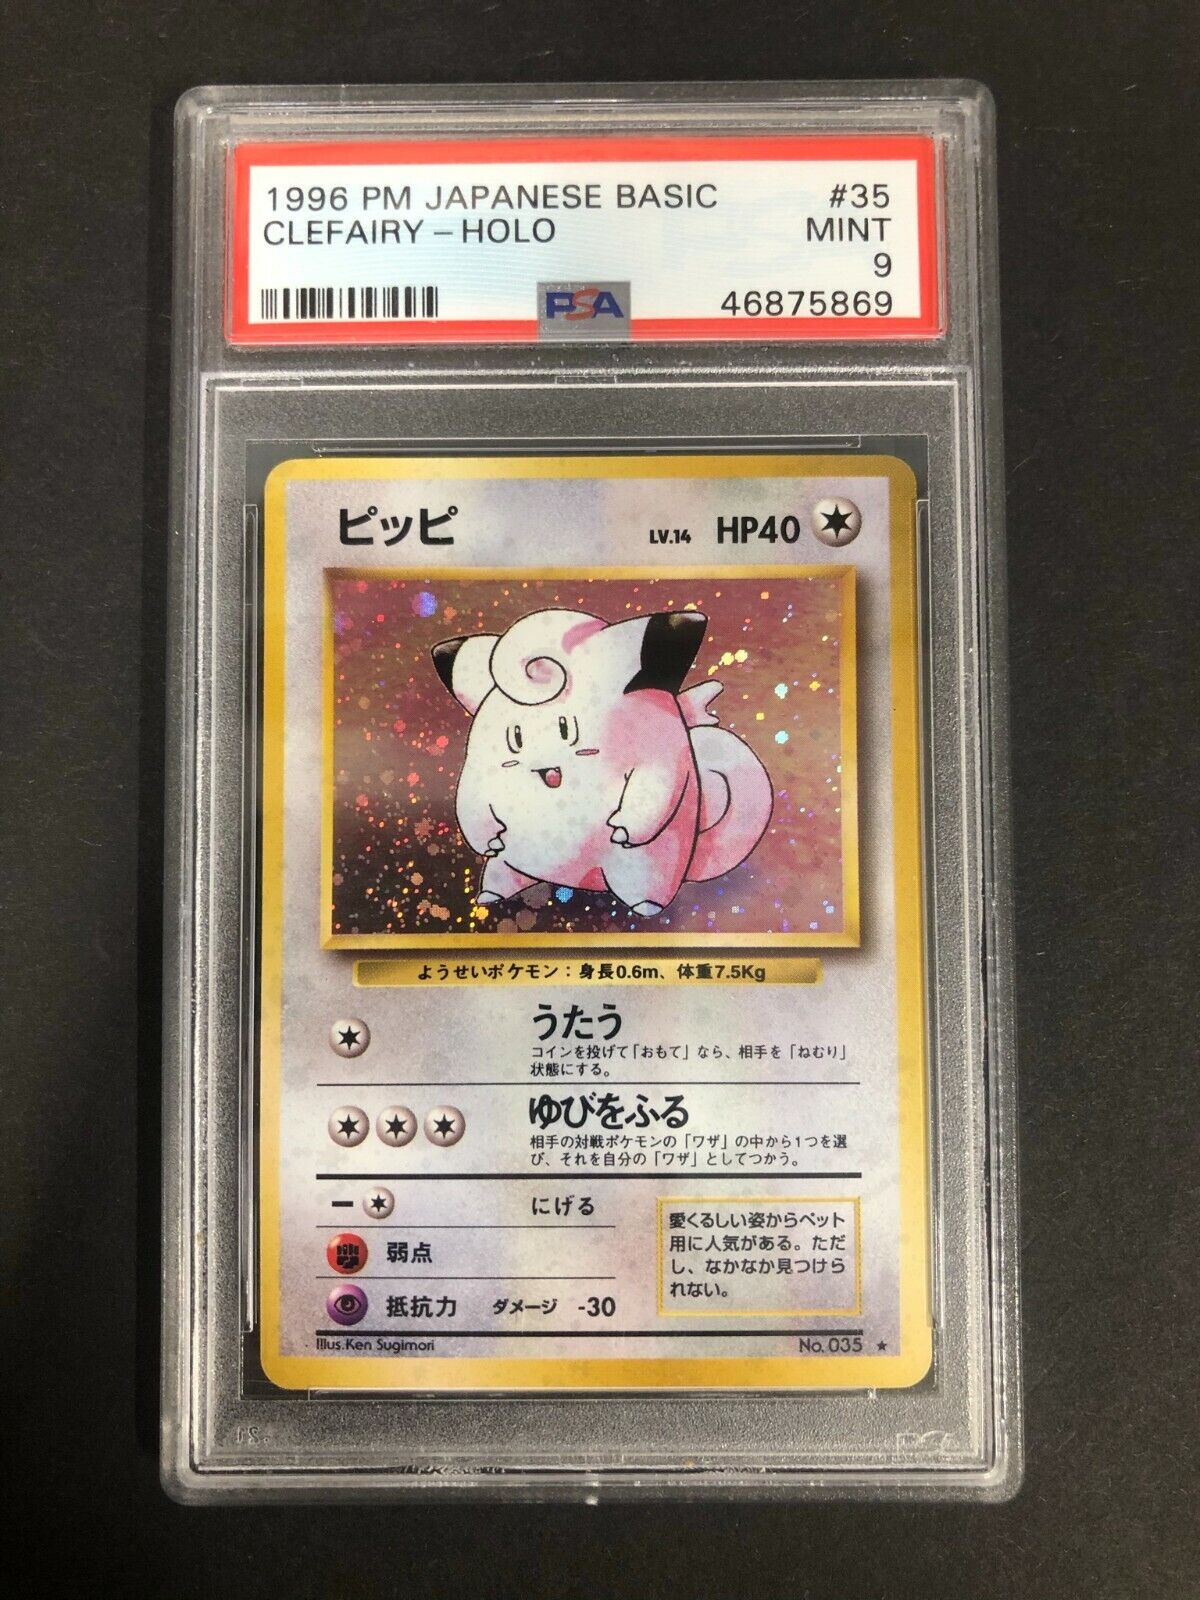 1996 PM Japanese Basic Clefairy PSA 9 Mint Holo Rare Vintage Pokemon Card 35